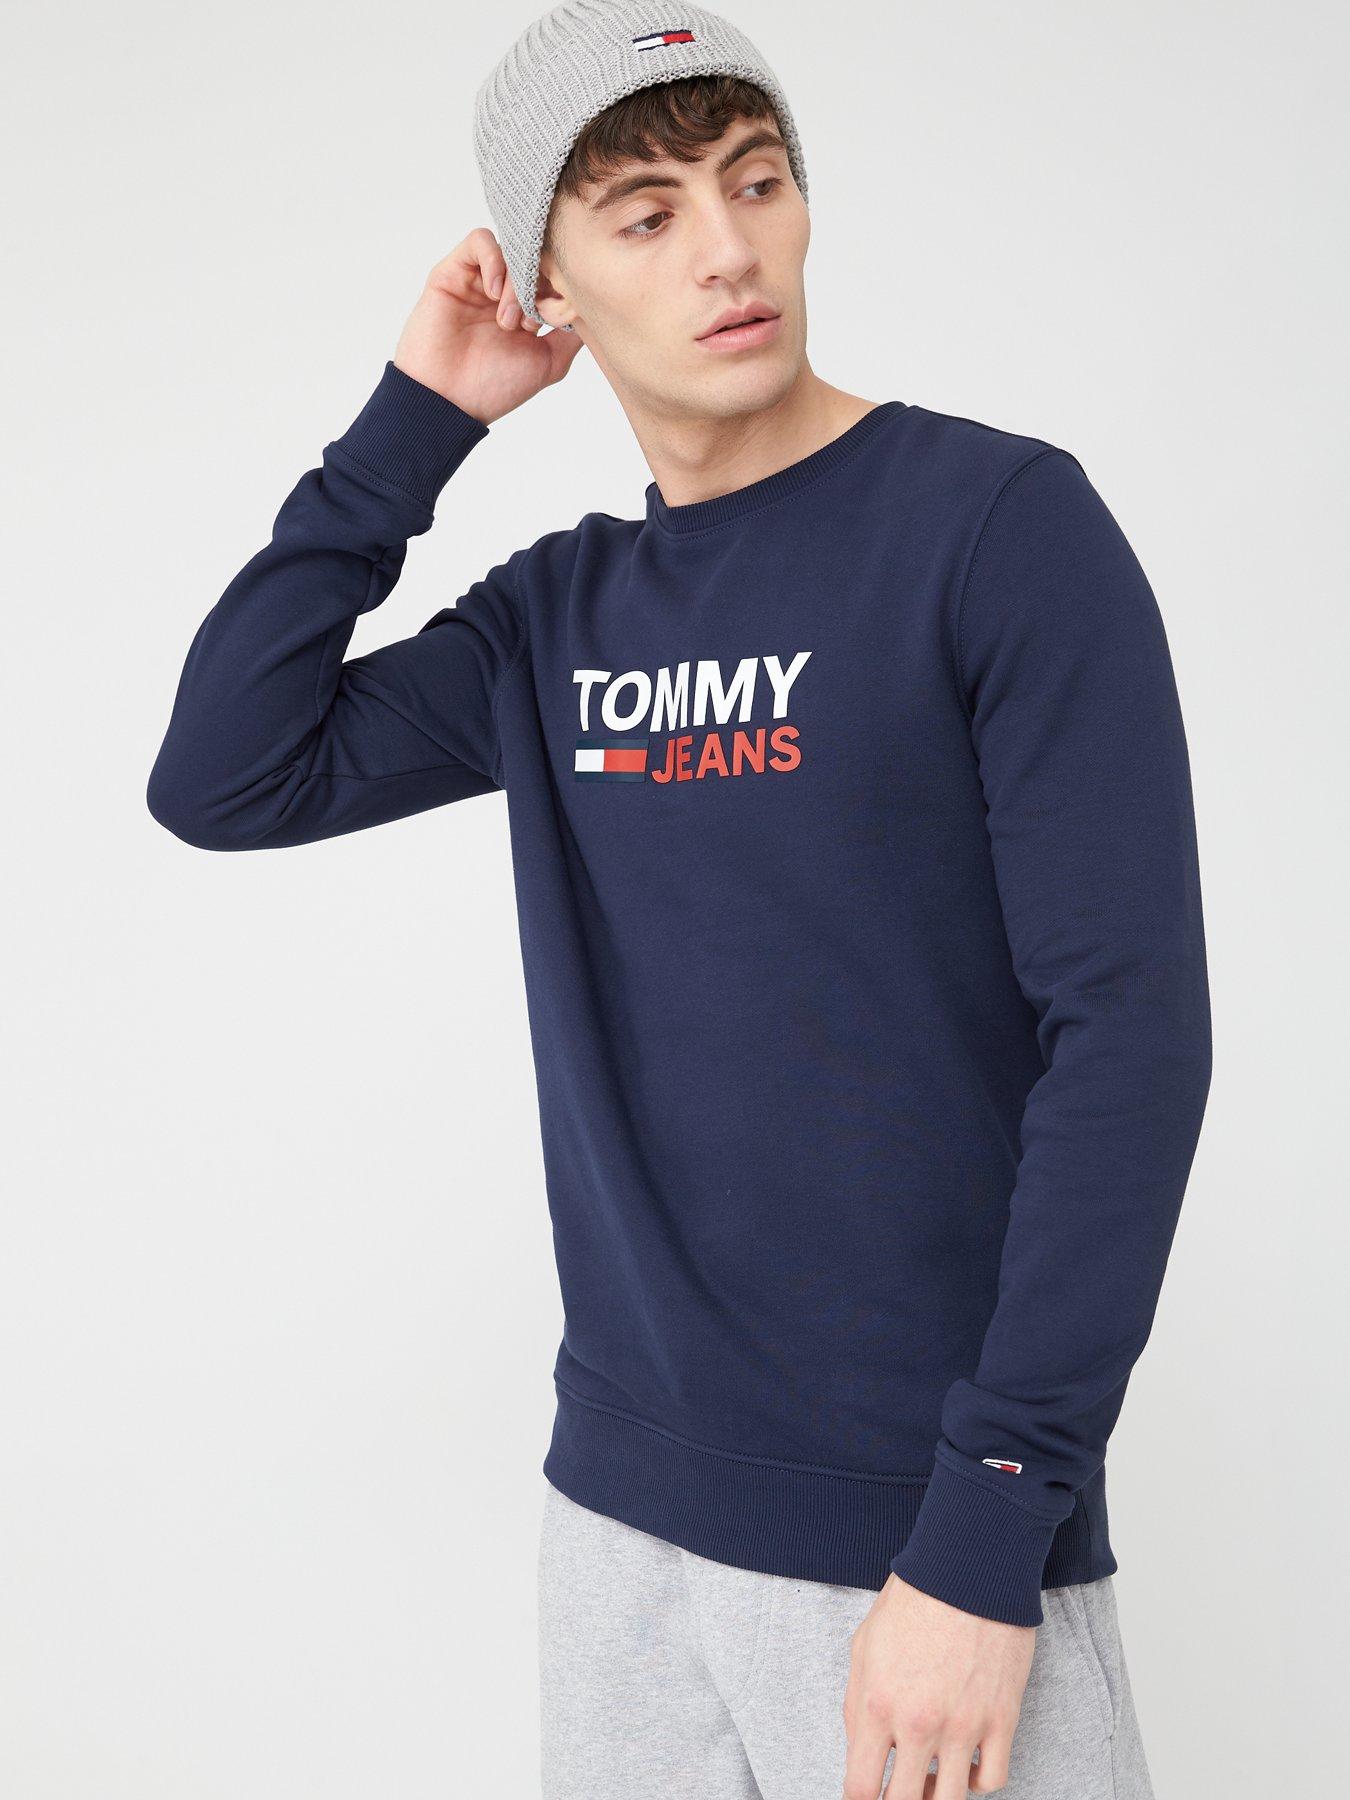 tommy jeans navy sweatshirt